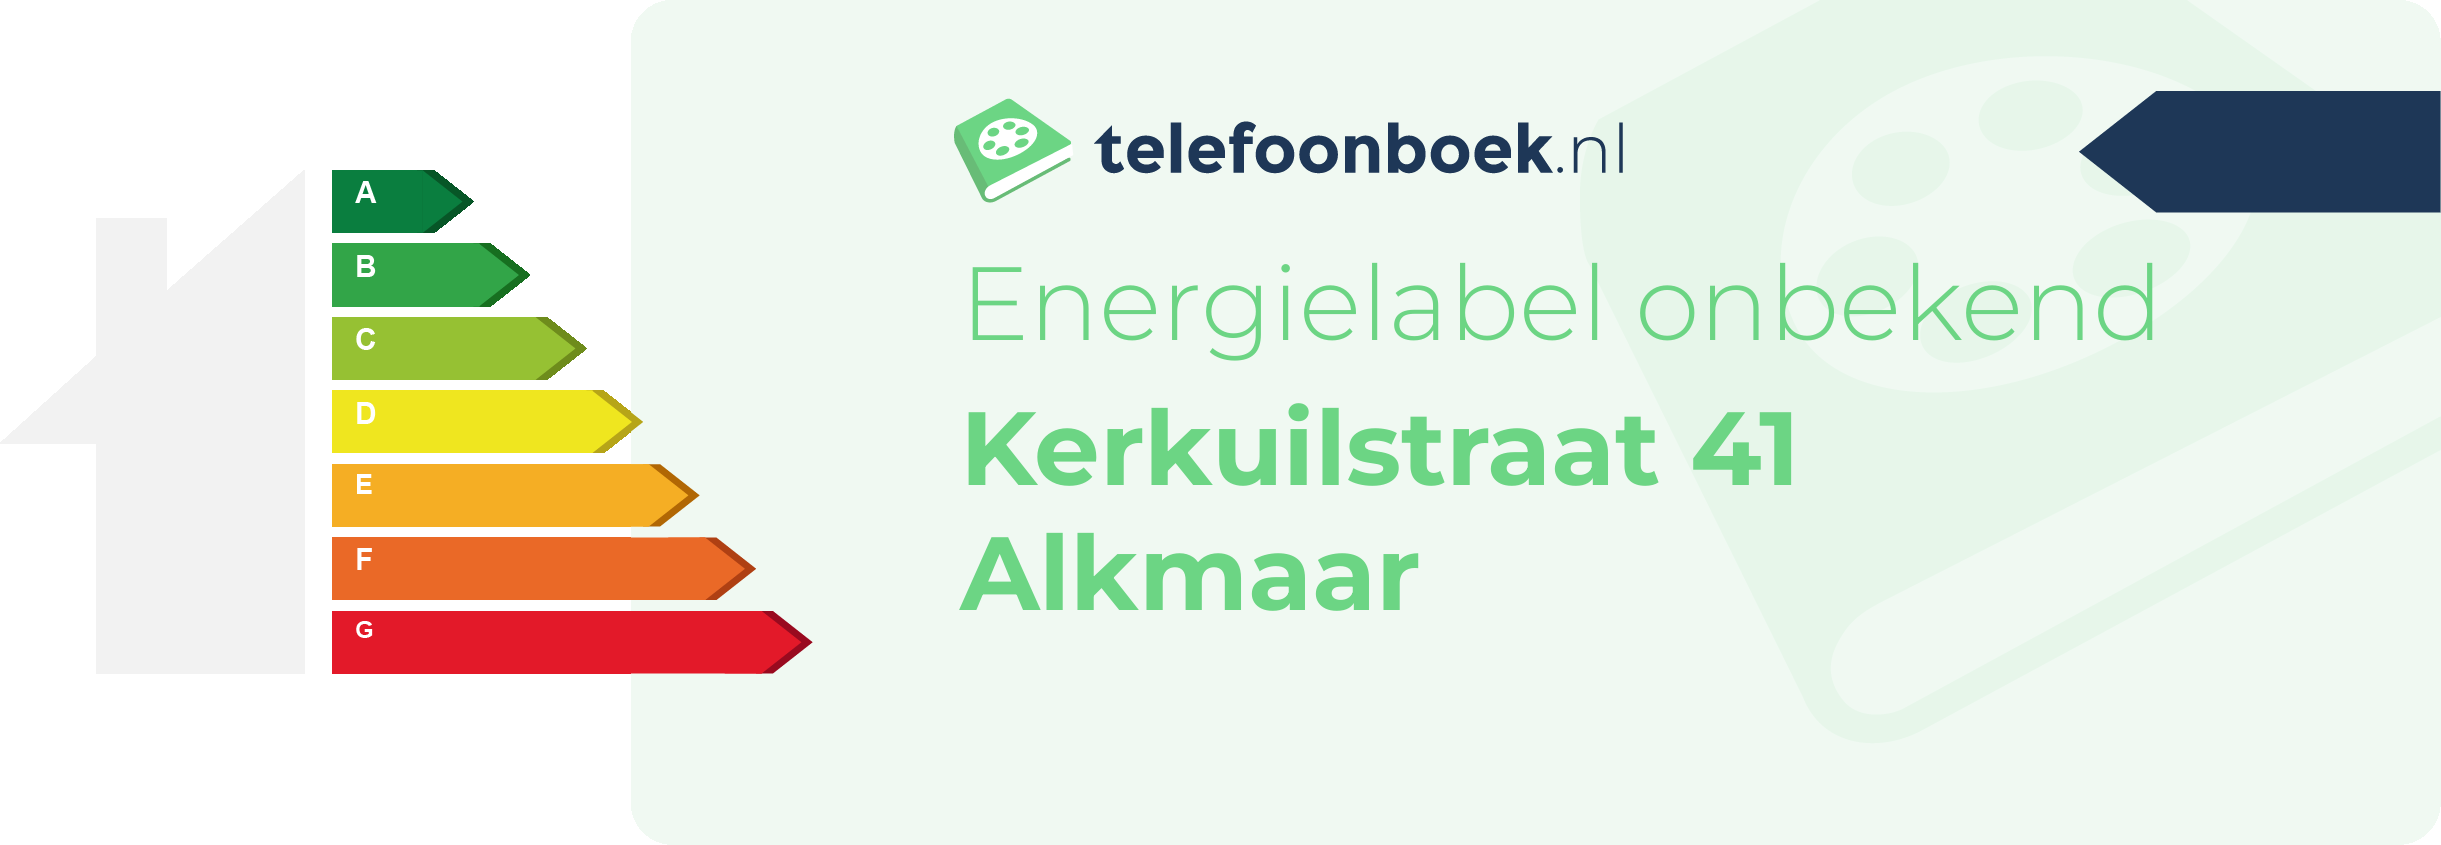 Energielabel Kerkuilstraat 41 Alkmaar